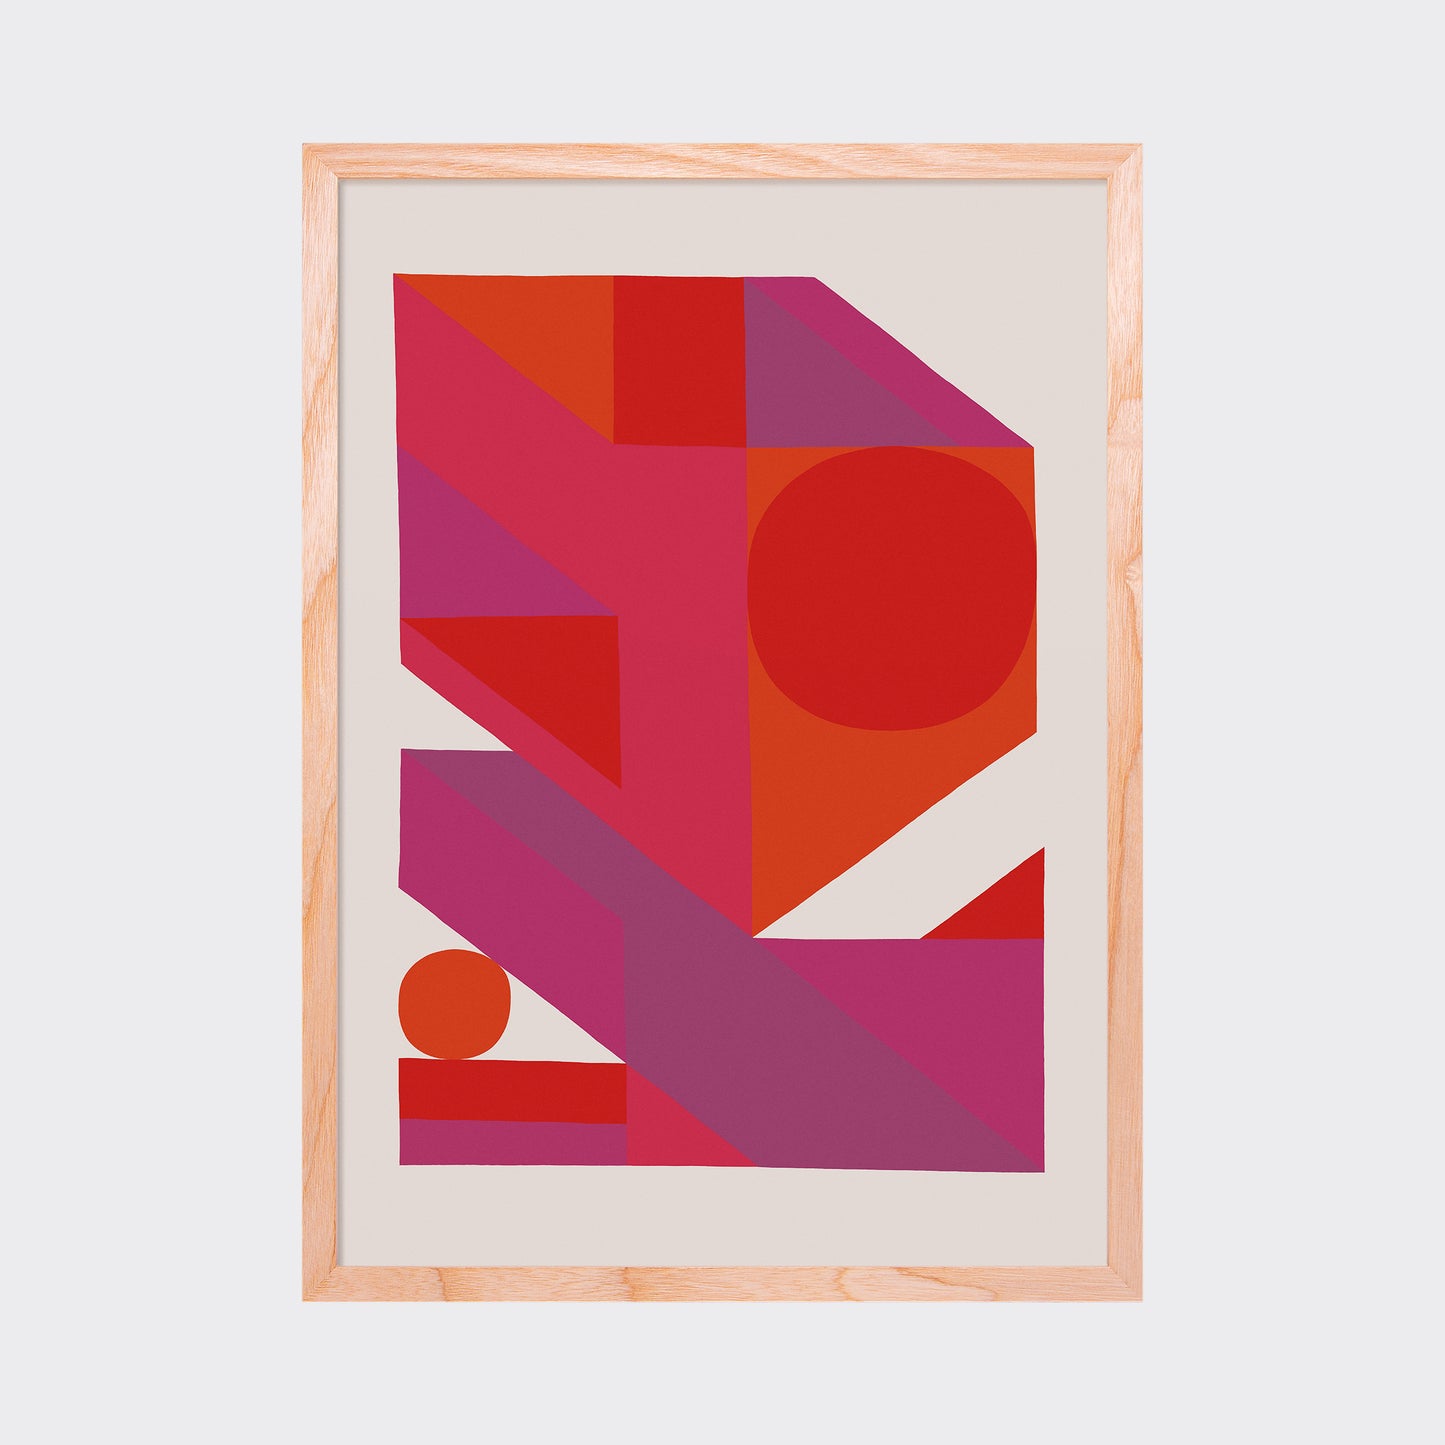 Adrian Johnson “Abstract 1”